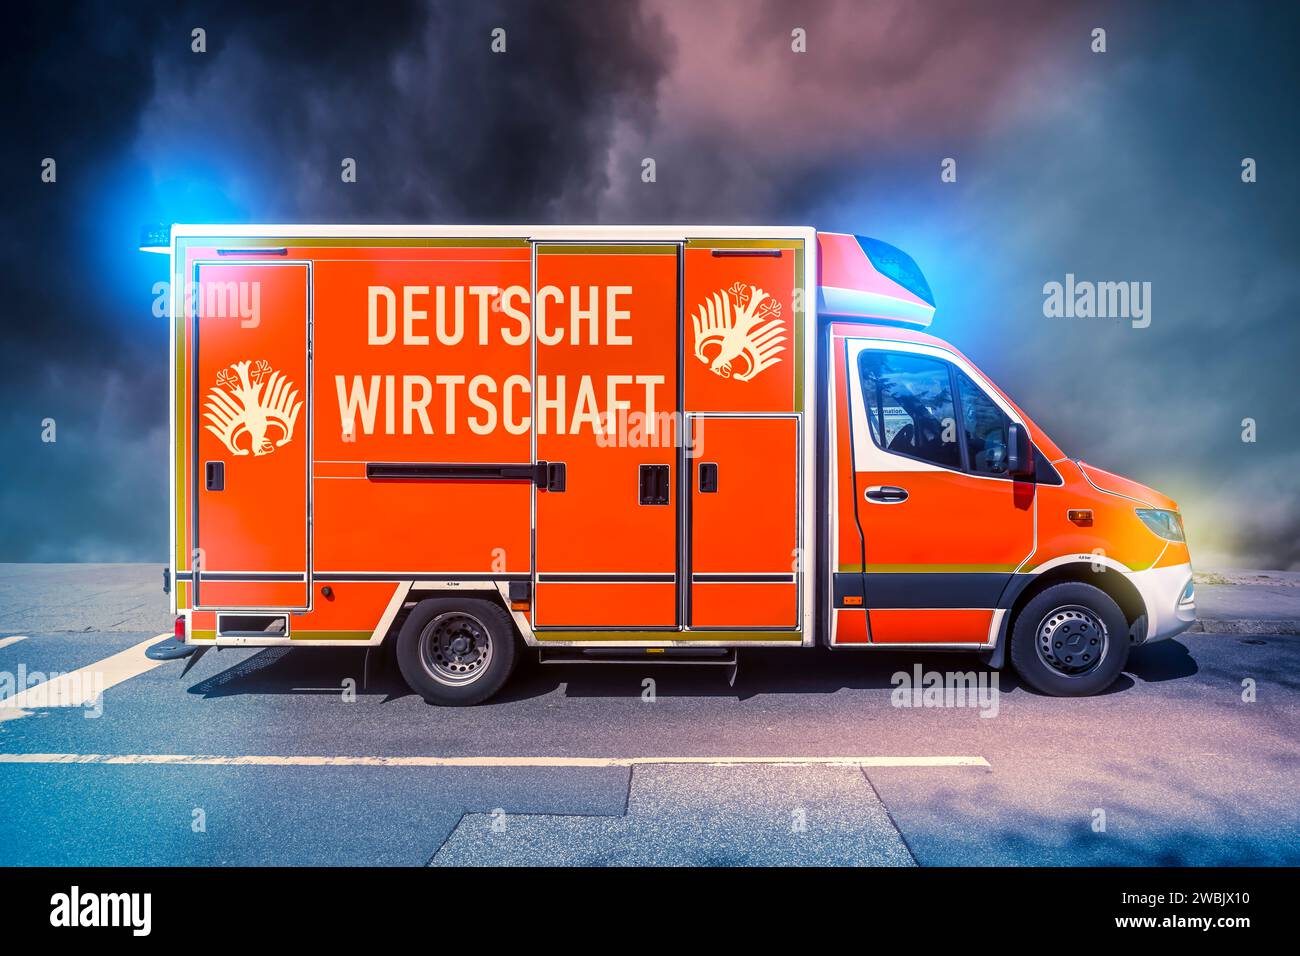 Ambulance With Inscription German Economy, Photomontage Stock Photo